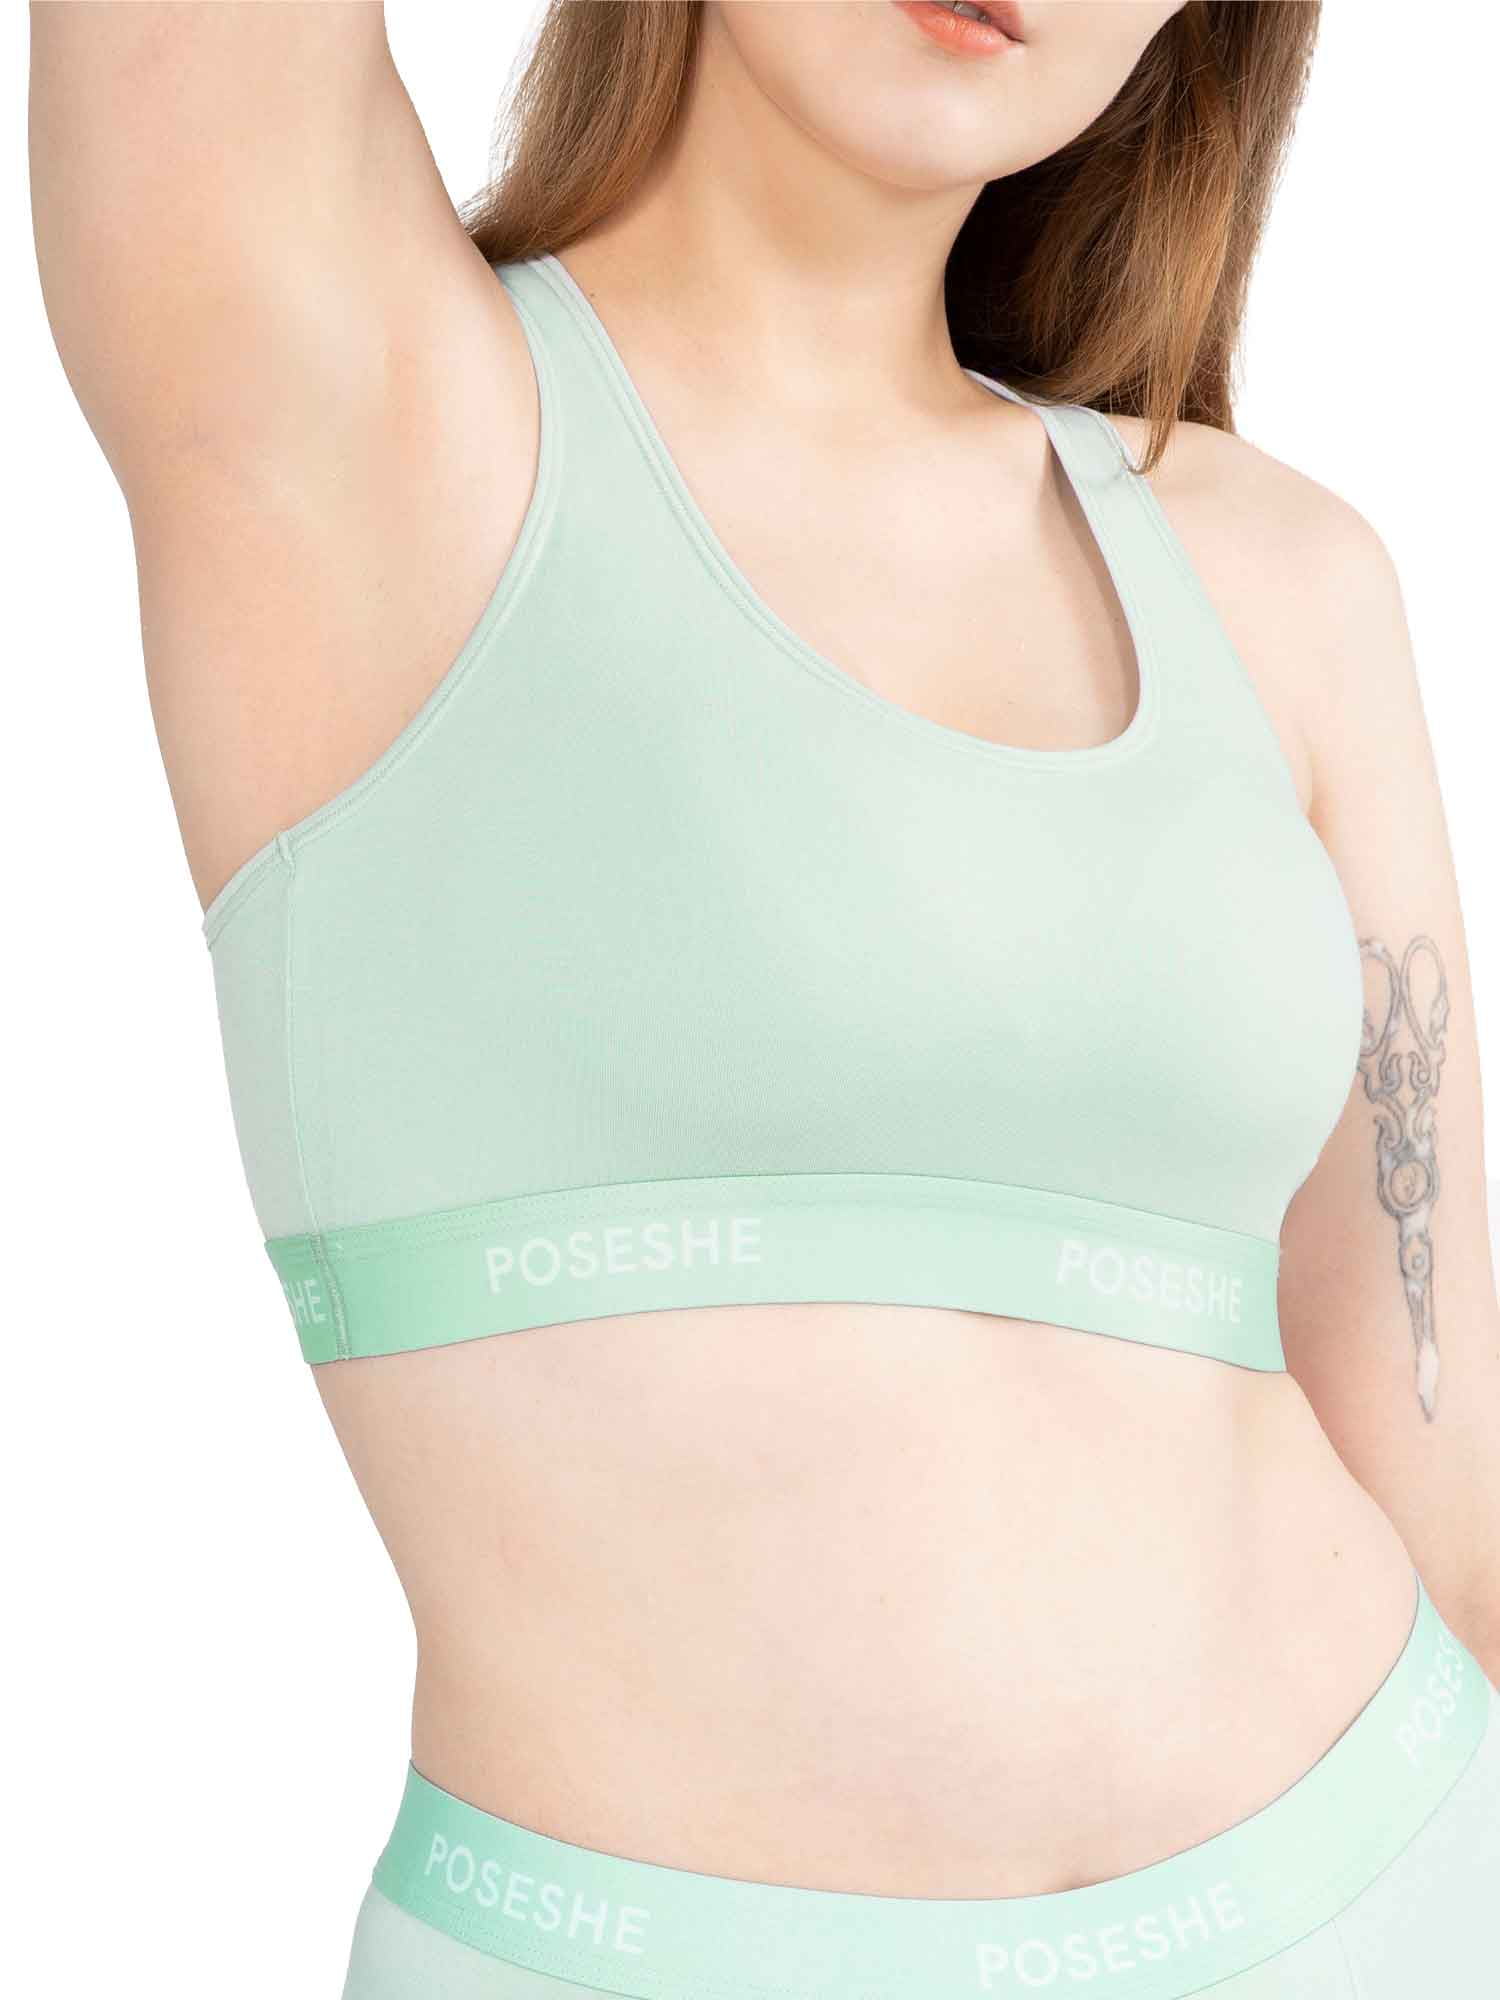 POSESHE Women's Ultra-Soft MicroModal Bralettes, S-5XL Plus Size Bra 